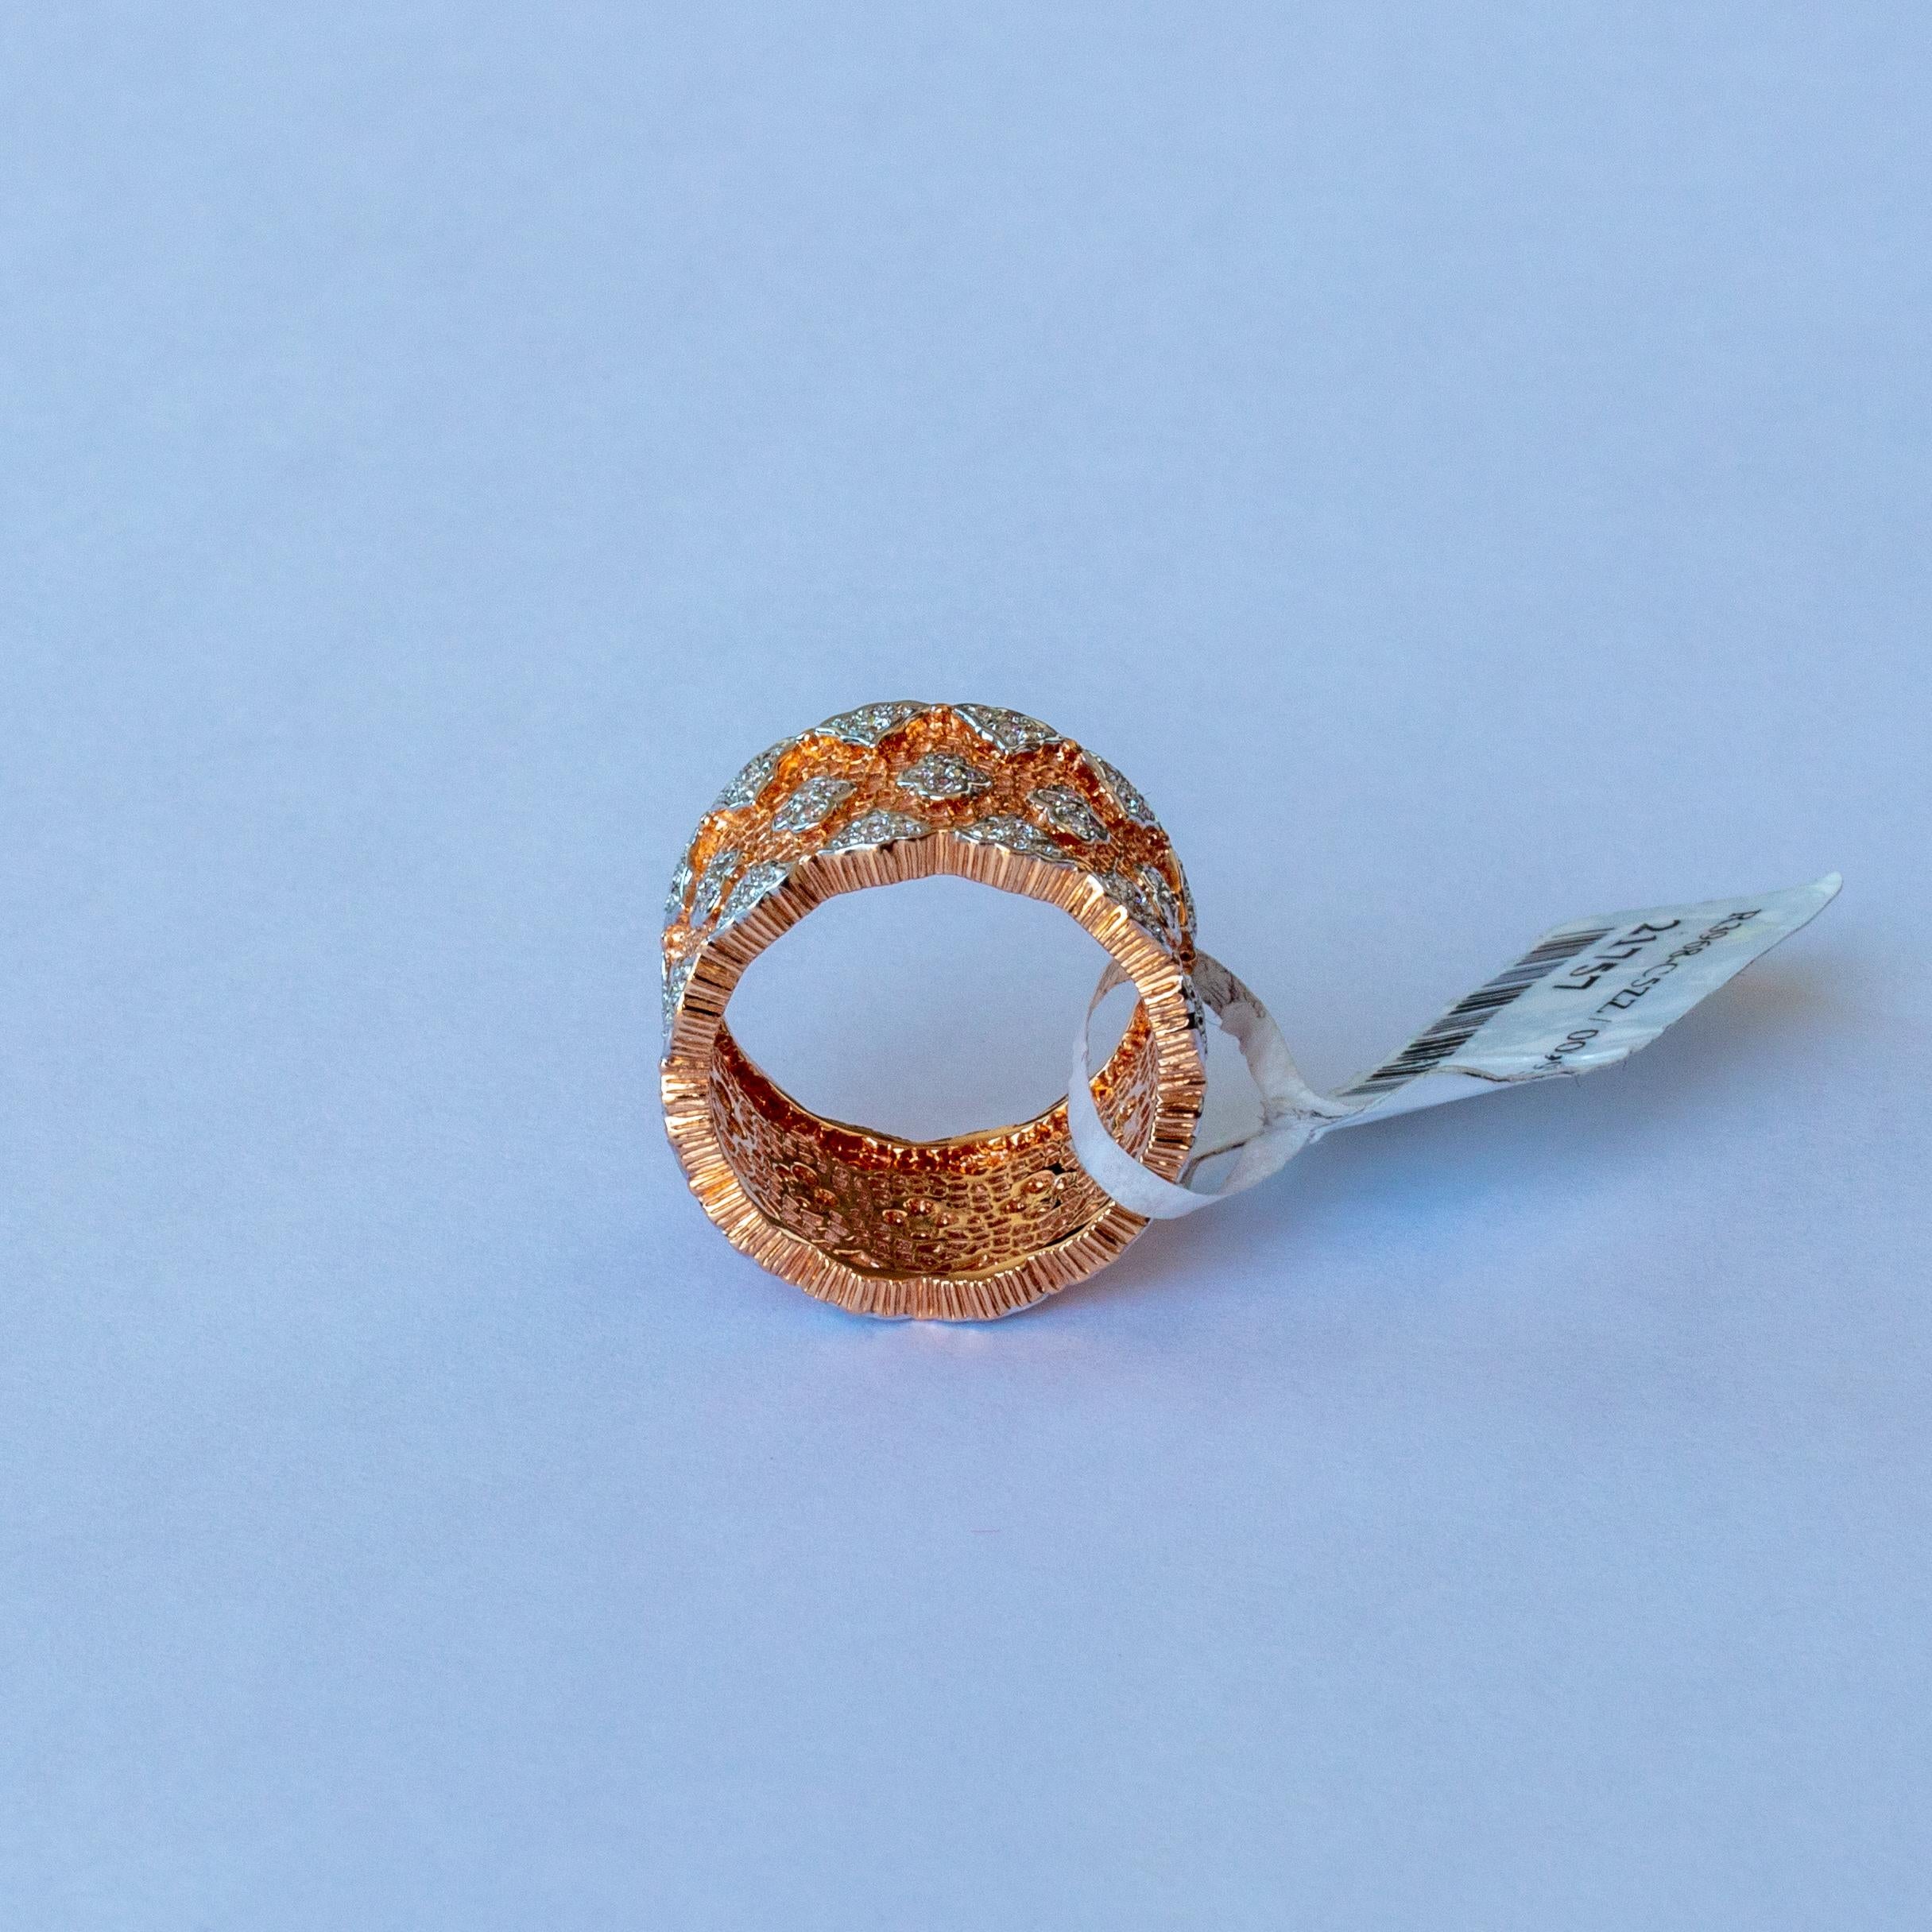 handcrafted sydney diamond engagement rings